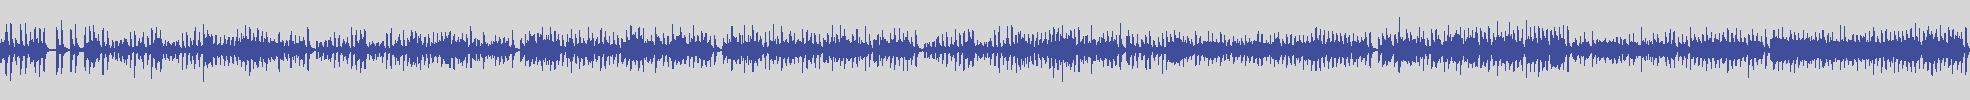 digiphonic_records [DPR011] Orchestra Spettacolo Romagna Folk - Lella [Original Mix] audio wave form